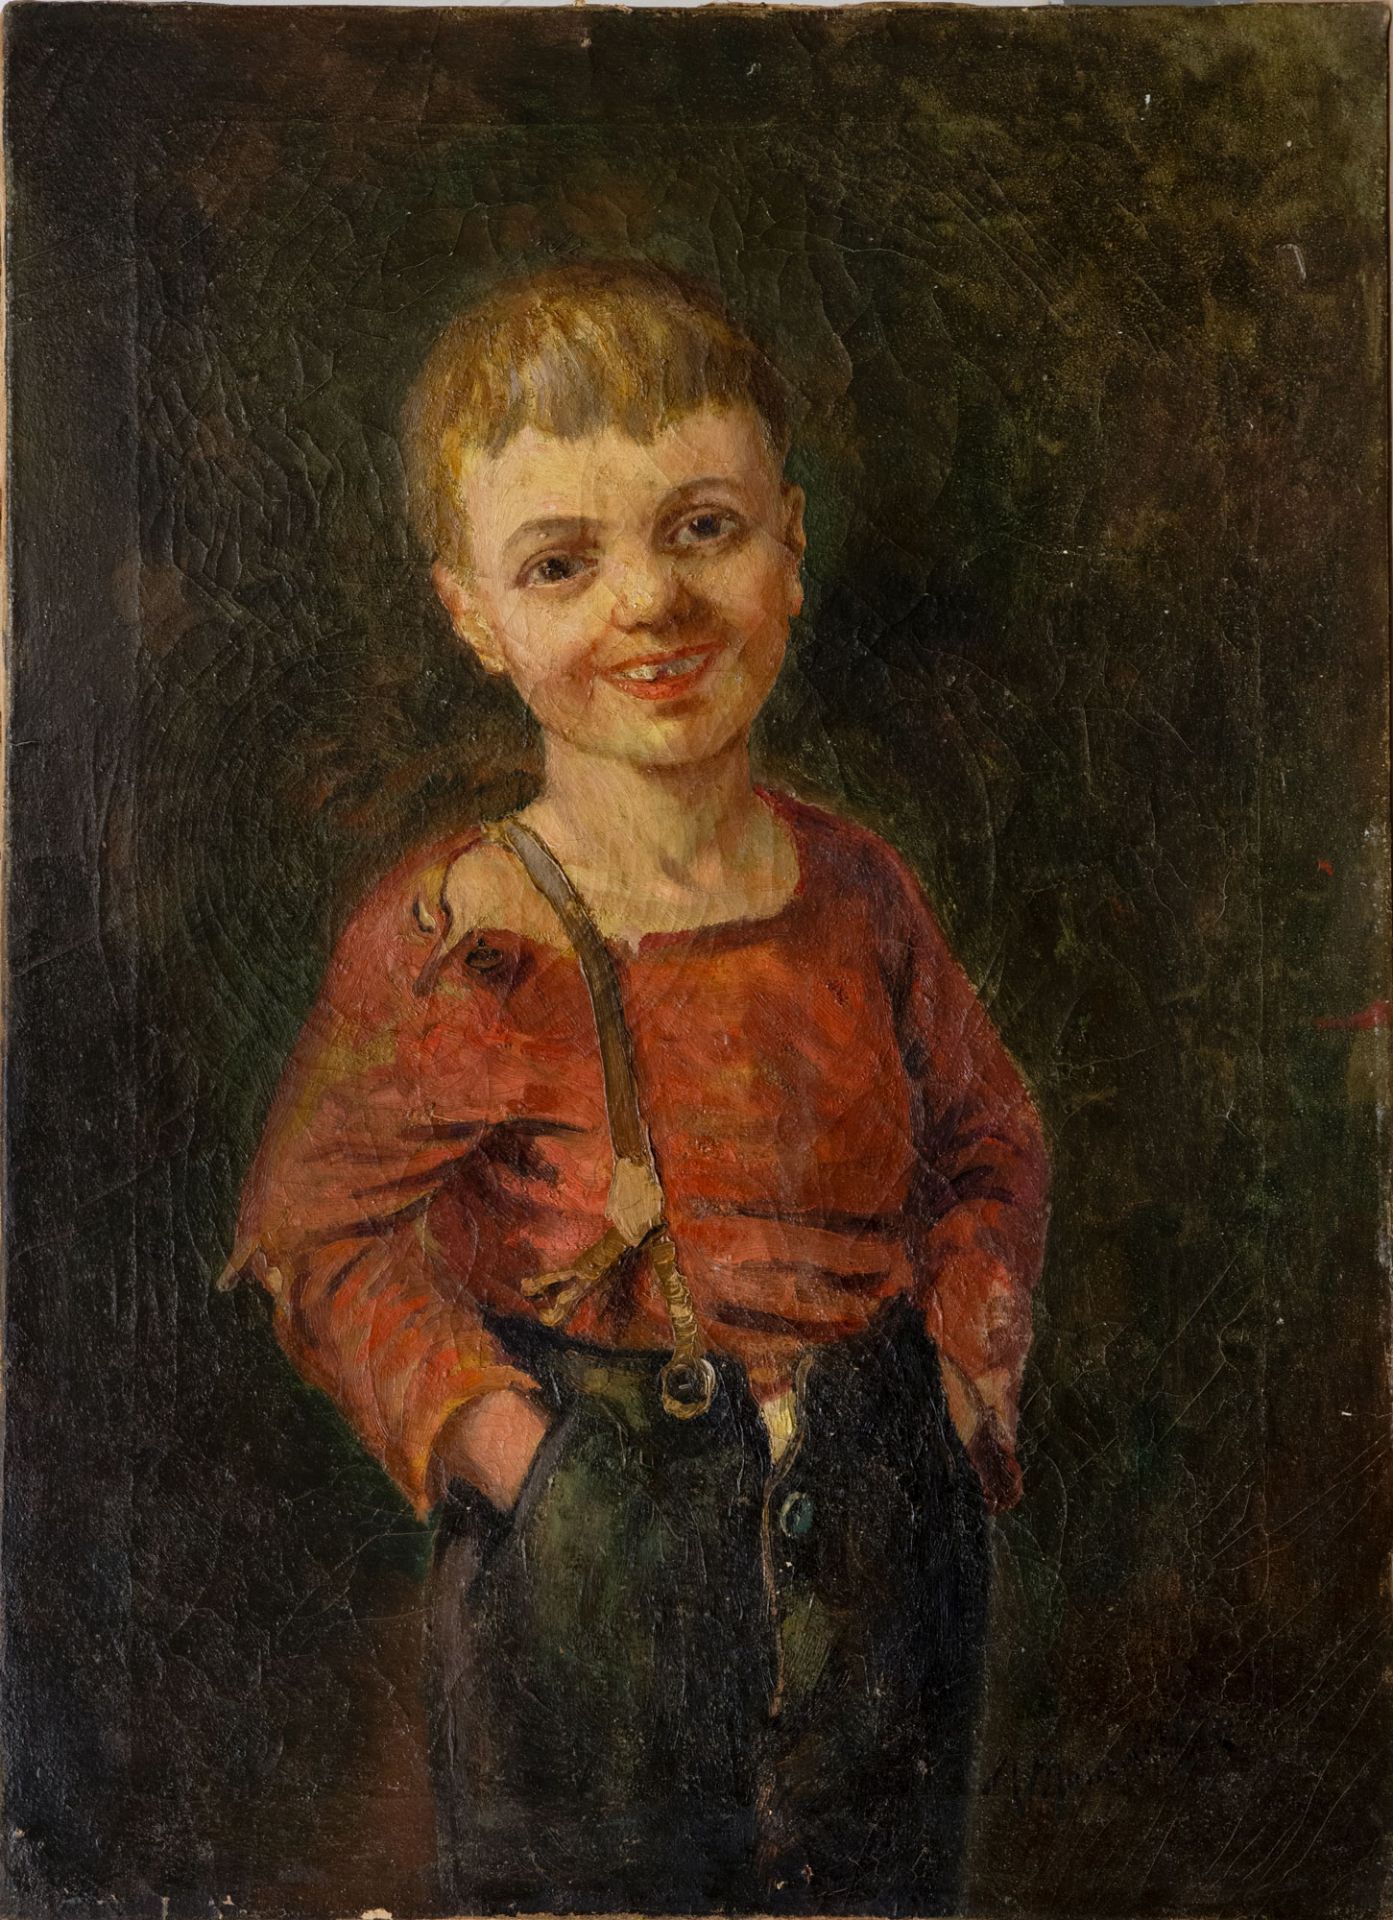 Antonio Mancini (1852-1930), Waiting for the Tooth Fairy